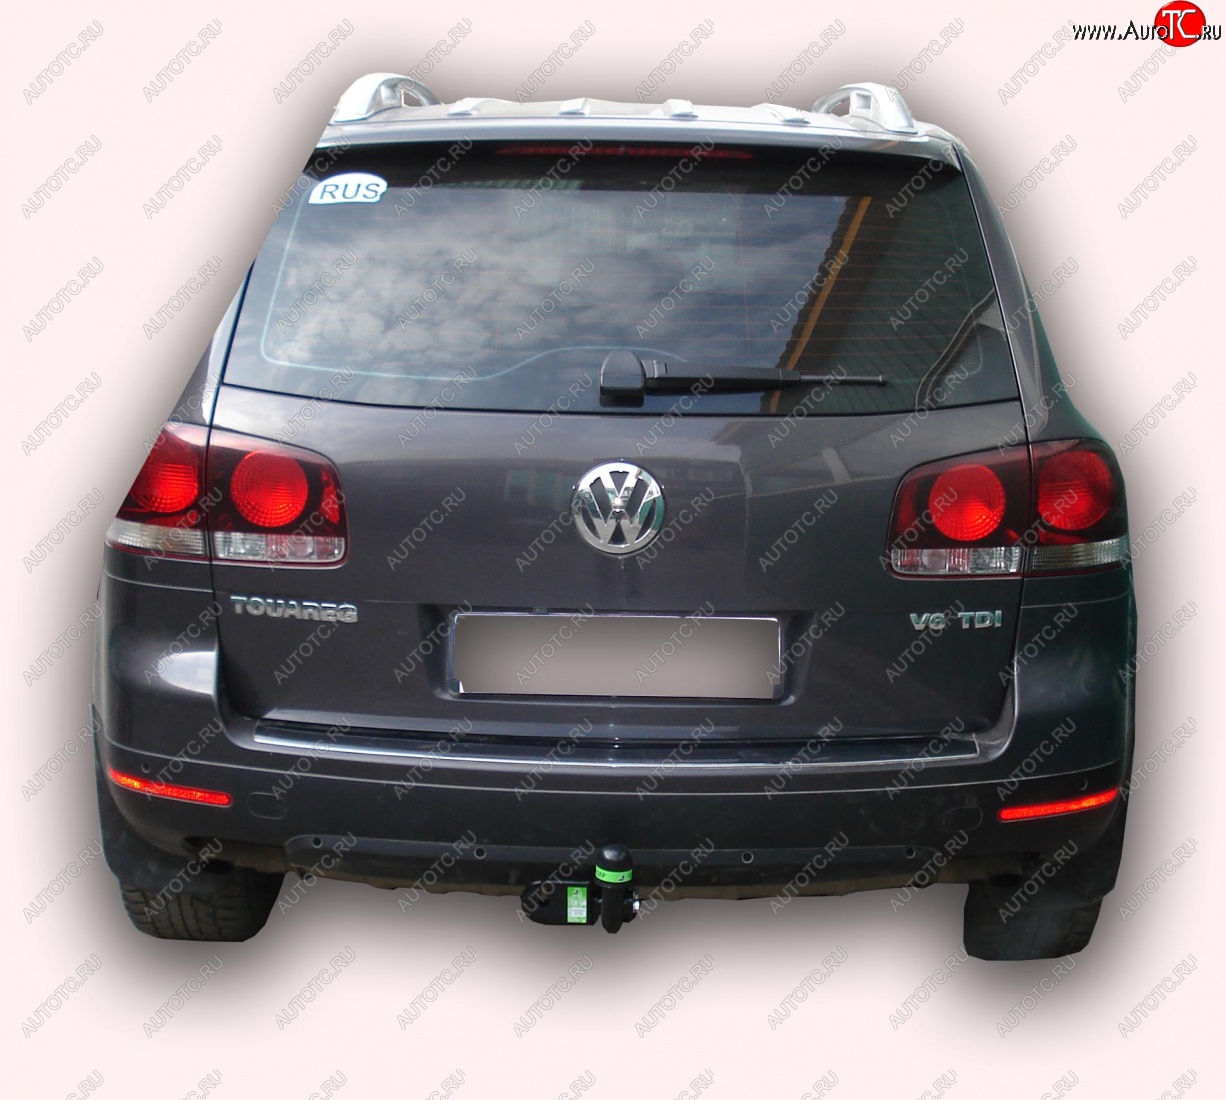 6 799 р. Фаркоп Лидер Плюс (съемный шар тип A) Volkswagen Touareg NF дорестайлинг (2010-2014) (Без электропакета)